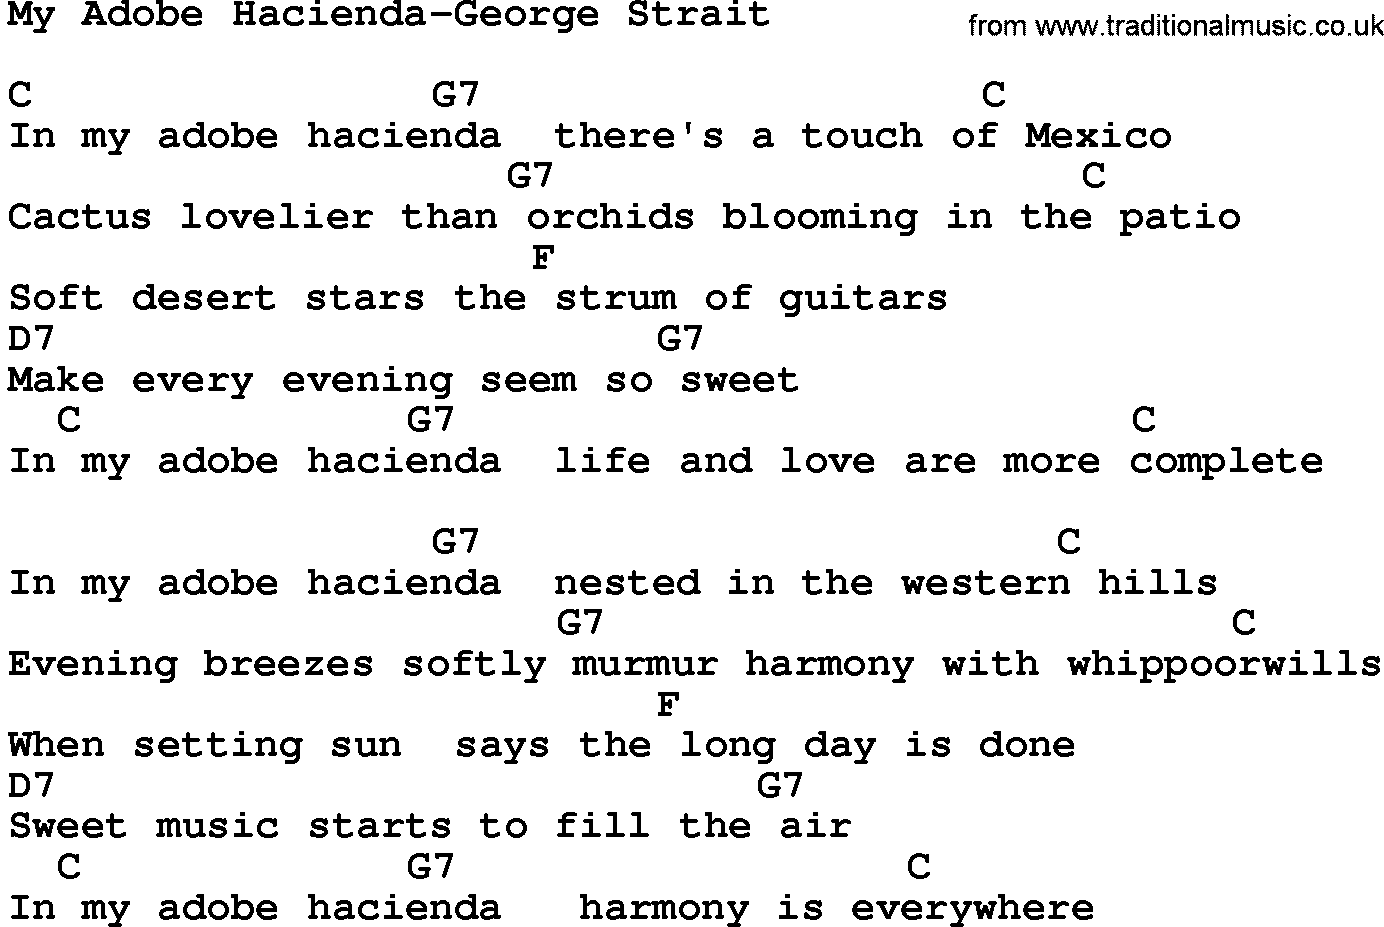 Country music song: My Adobe Hacienda-George Strait lyrics and chords